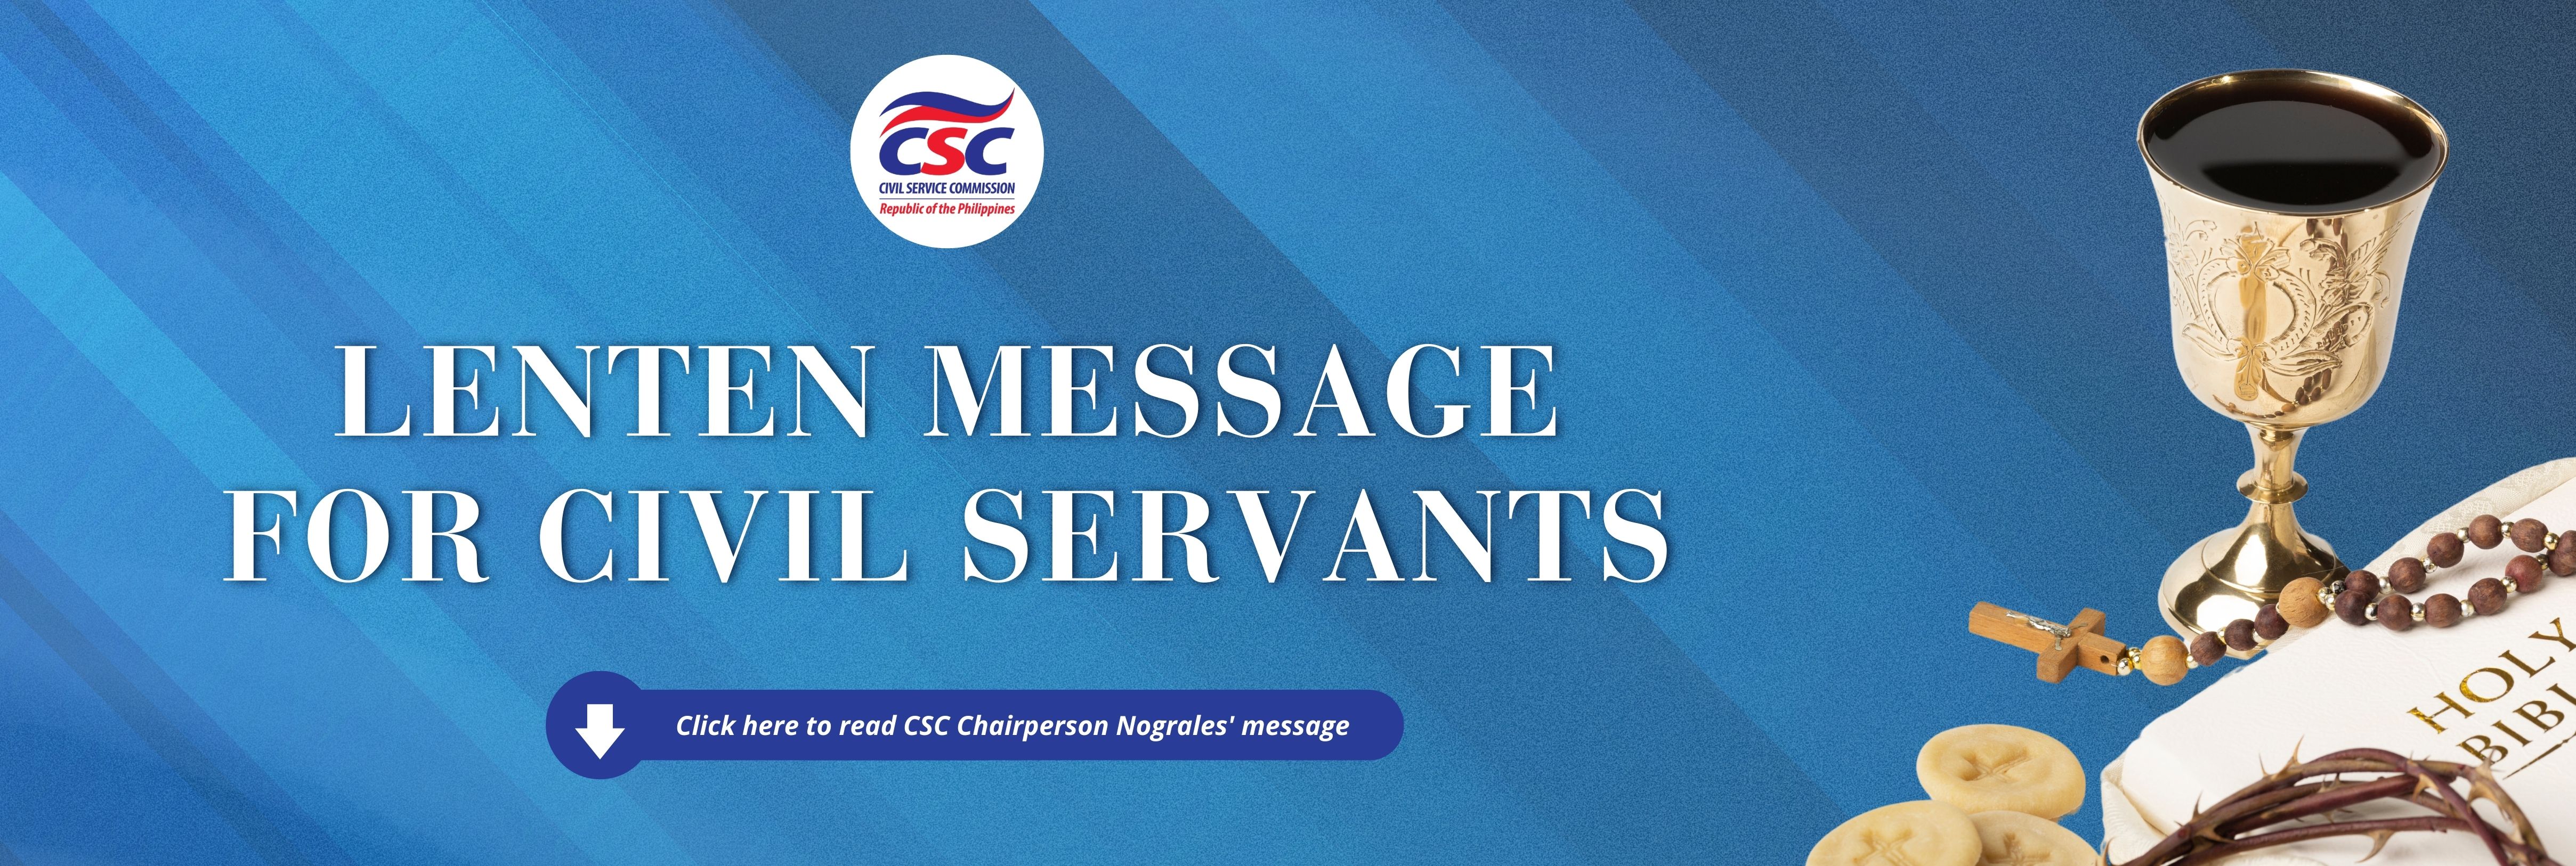 Lenten Message for Civil Servants